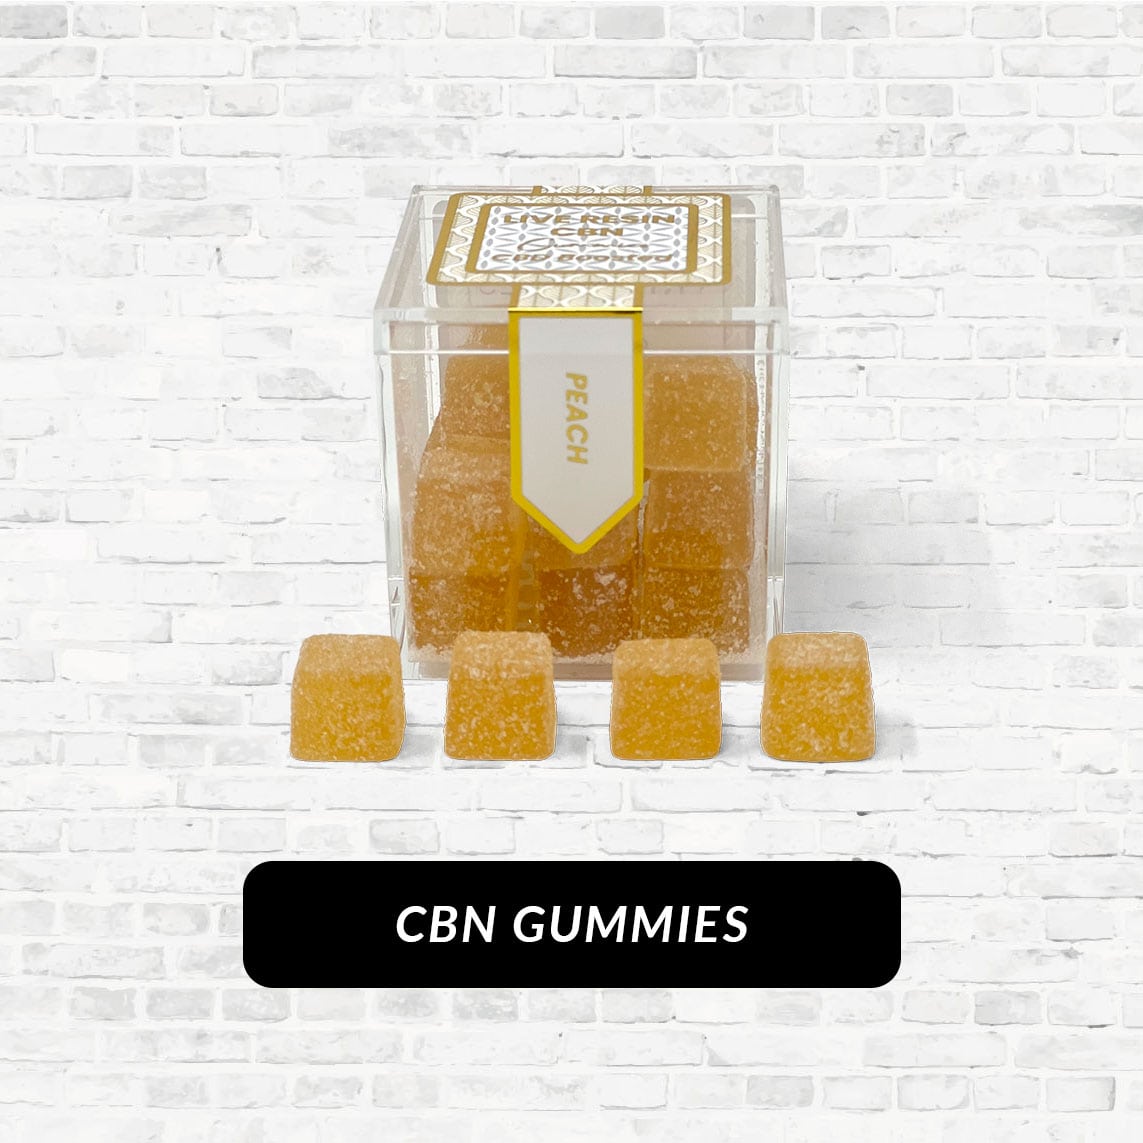 All CBN Gummies